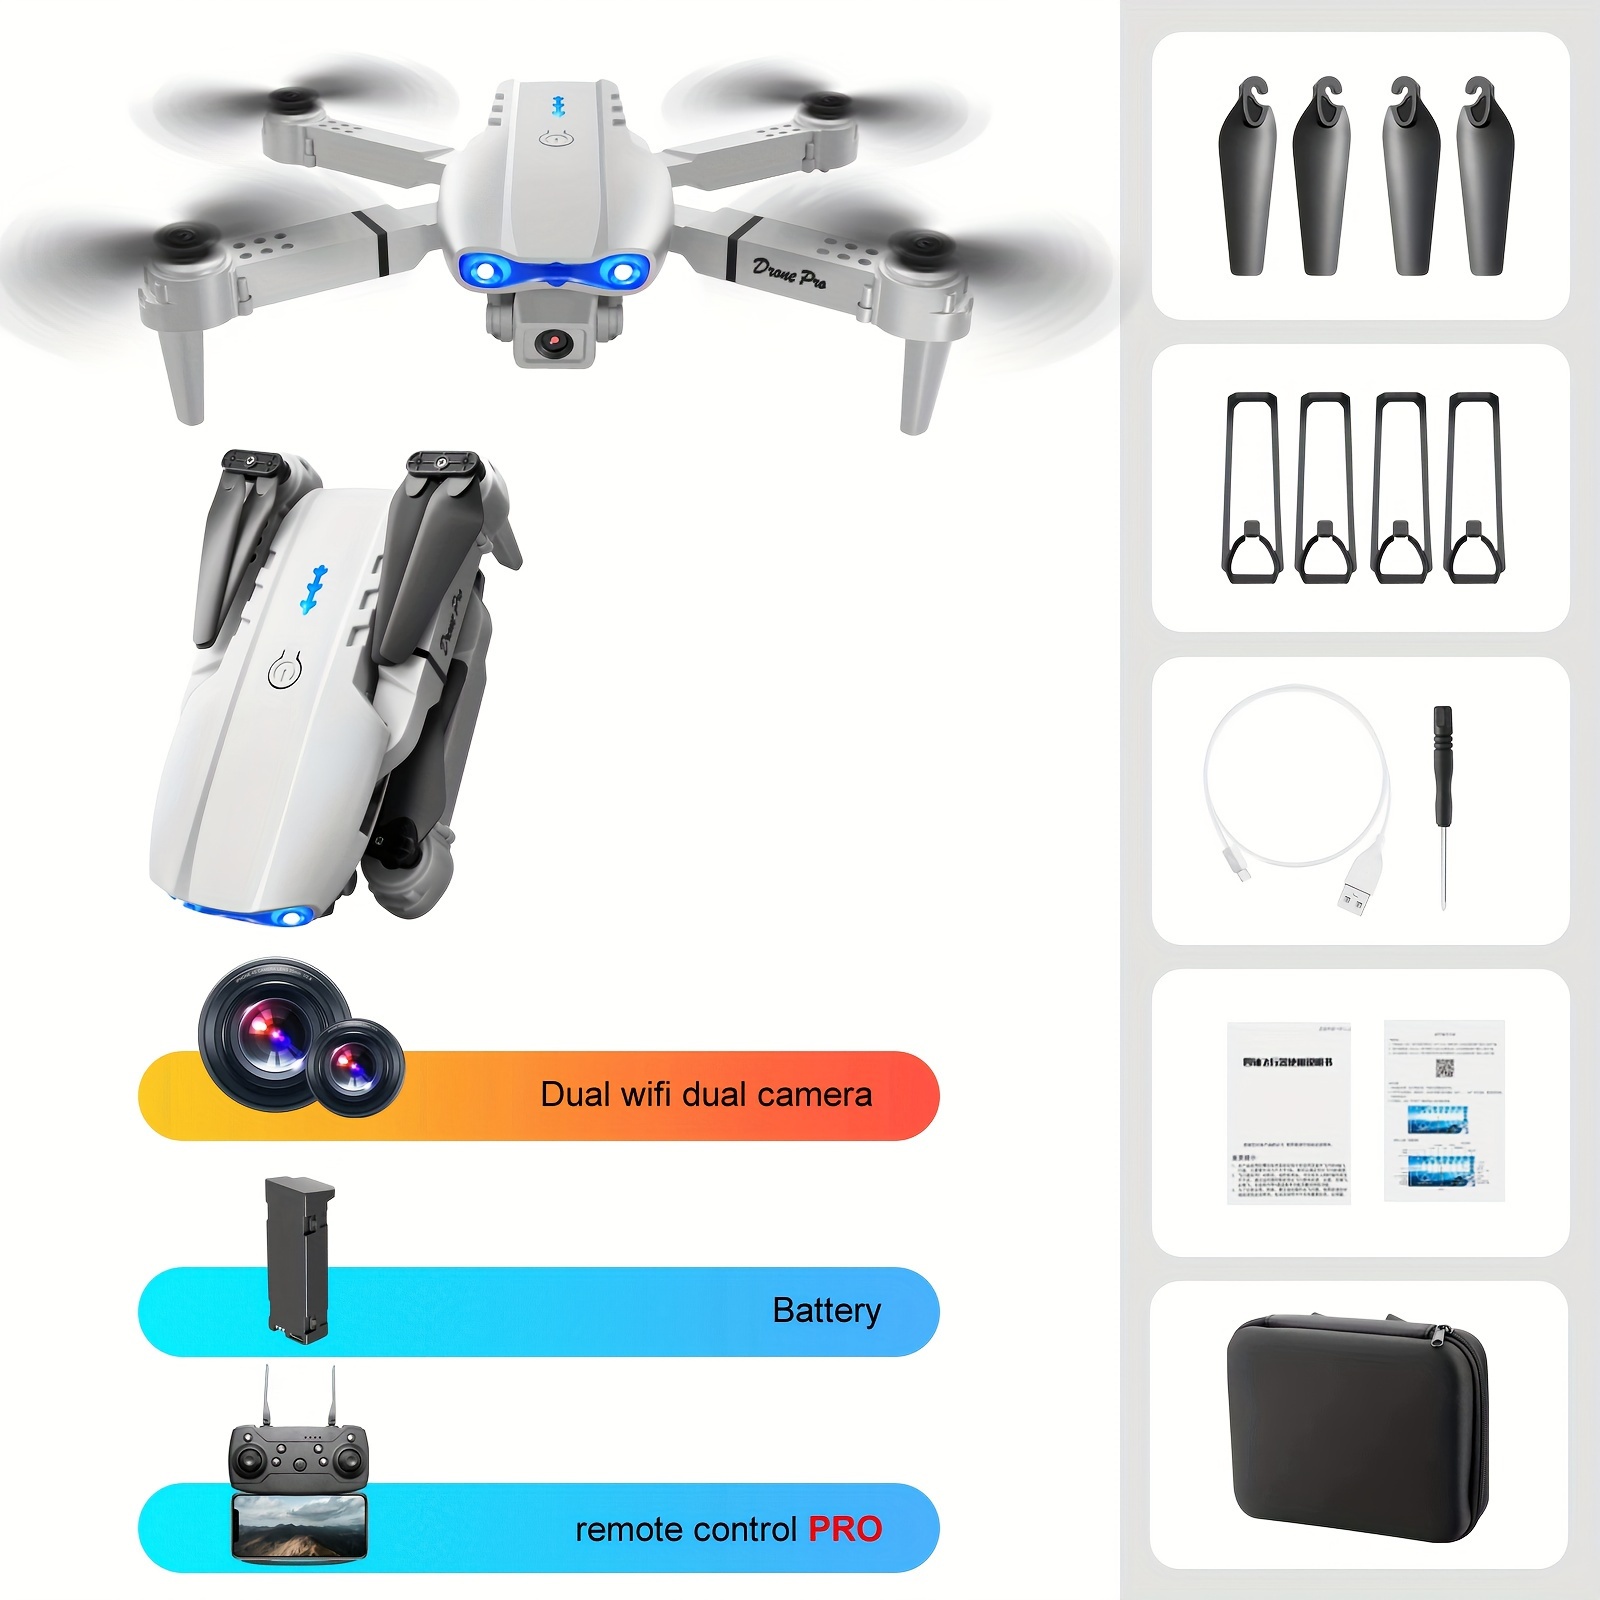 E99 Drone: Drone Plegable Doble Cámara Sd Regalo Perfecto - Temu